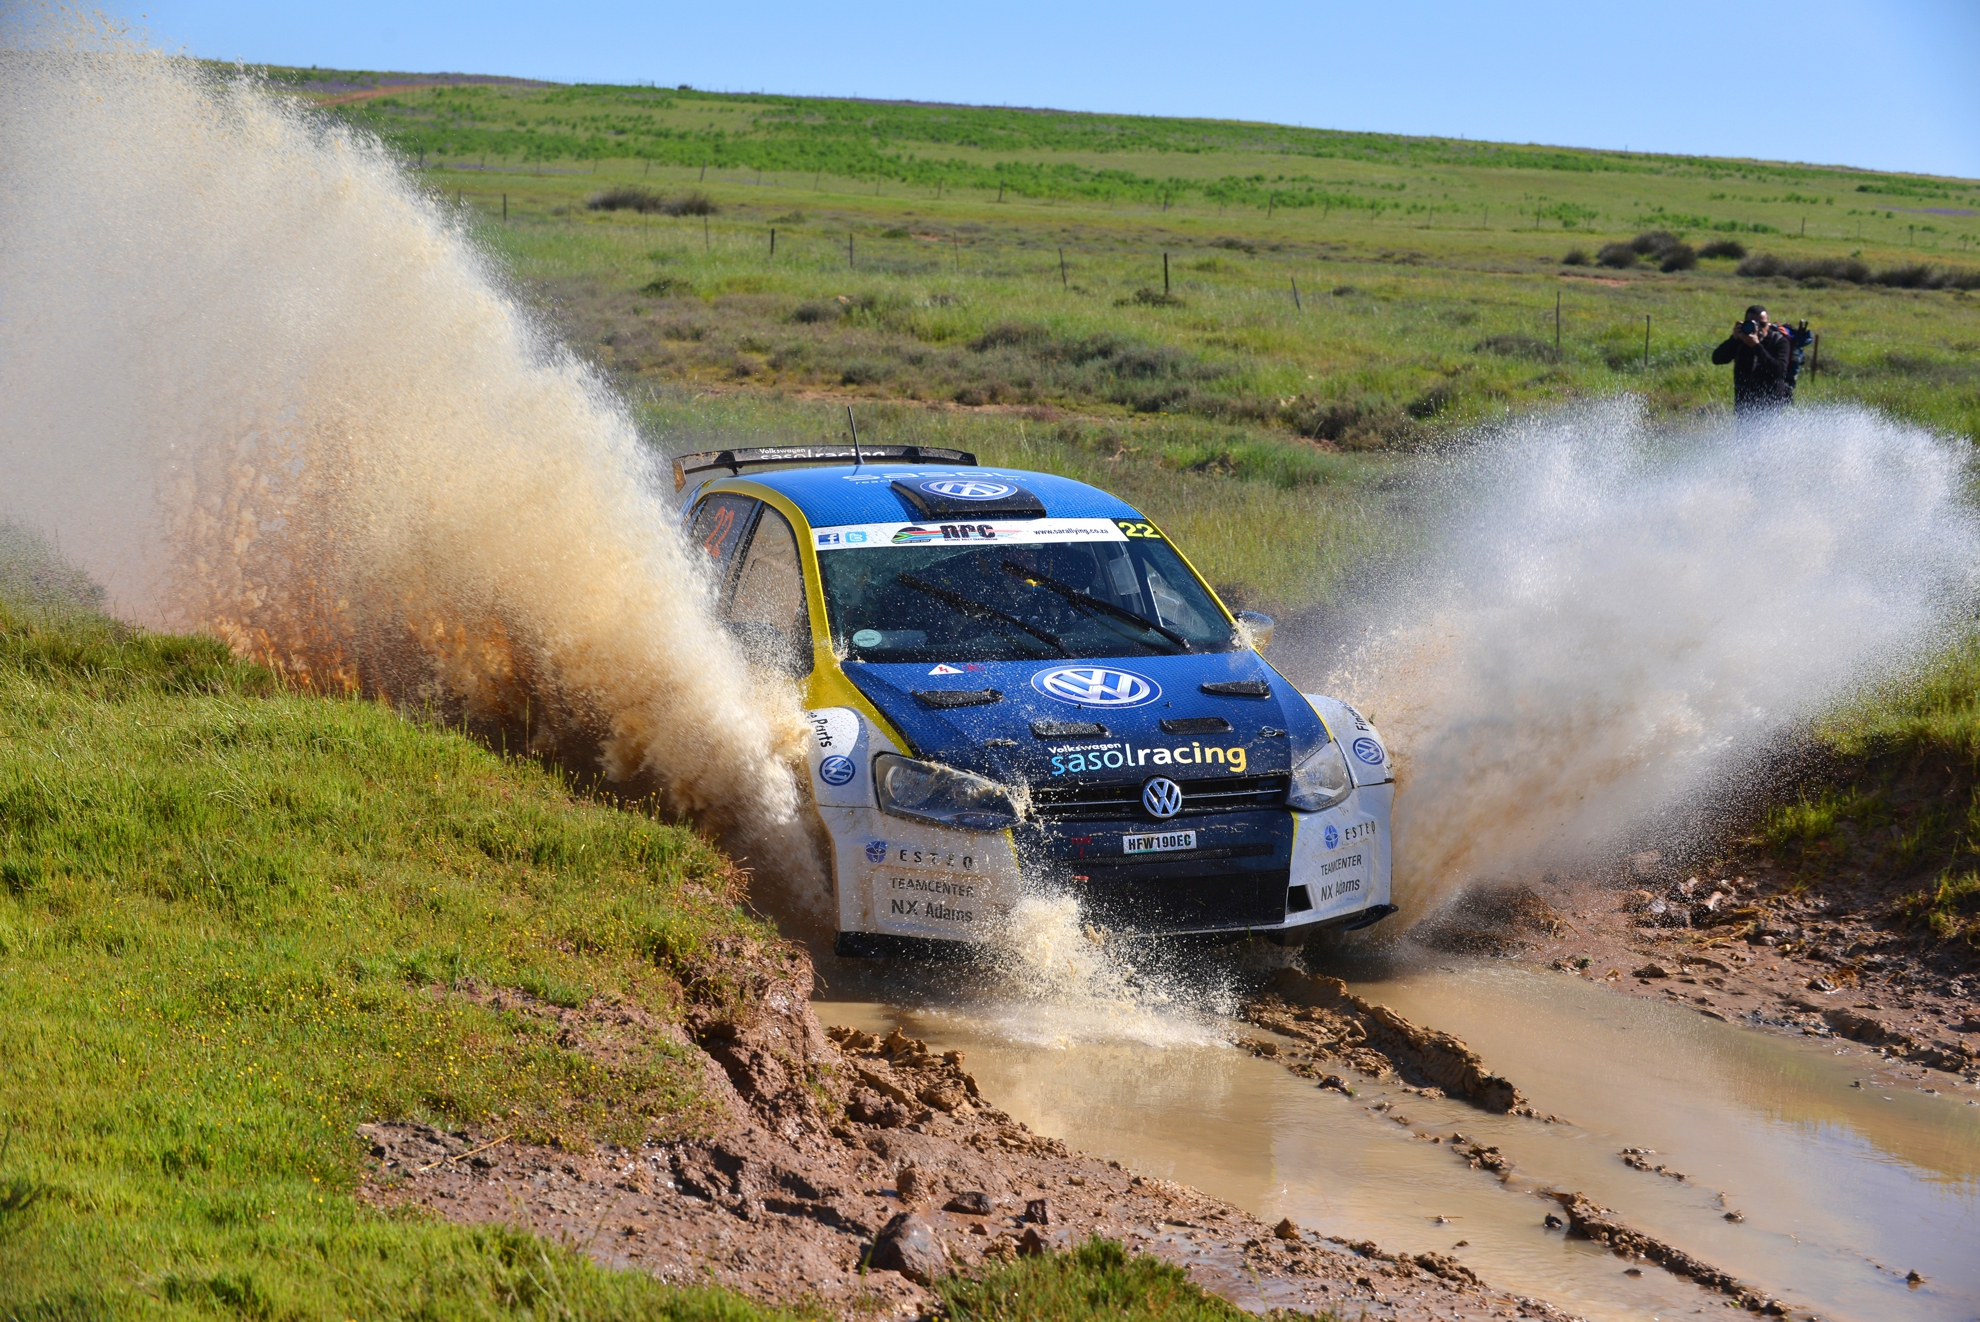 National rally season for Volkswagen Sasolracing team